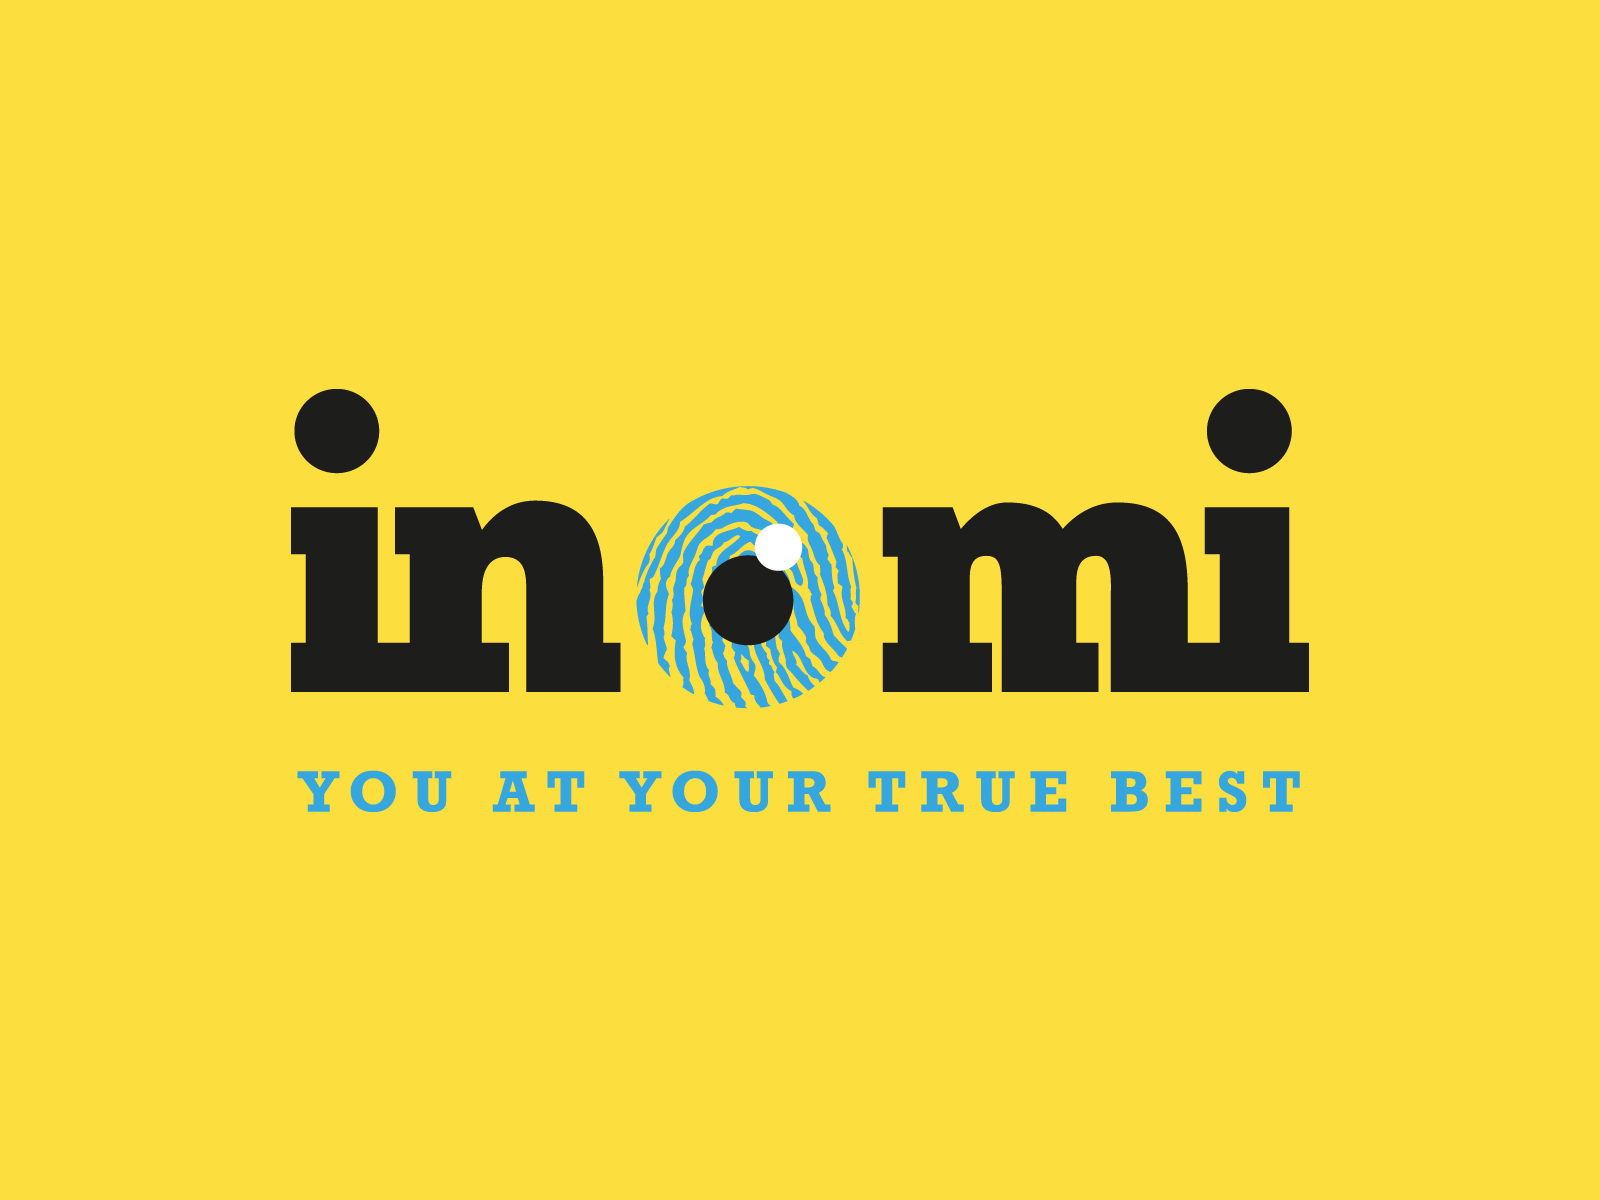 The Inomi logo